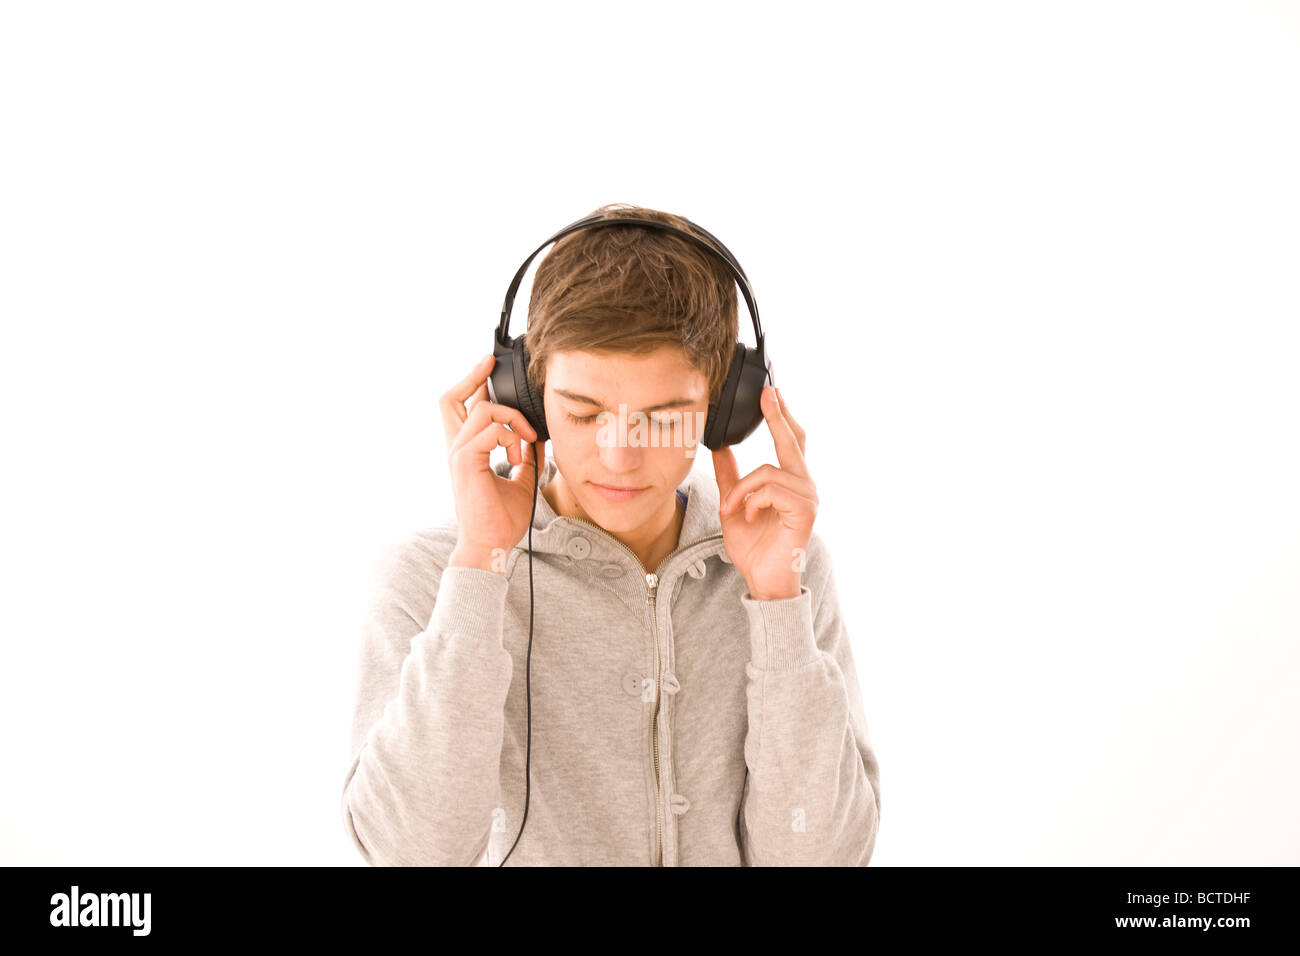 Boy listening to music on headphones Stock Photo